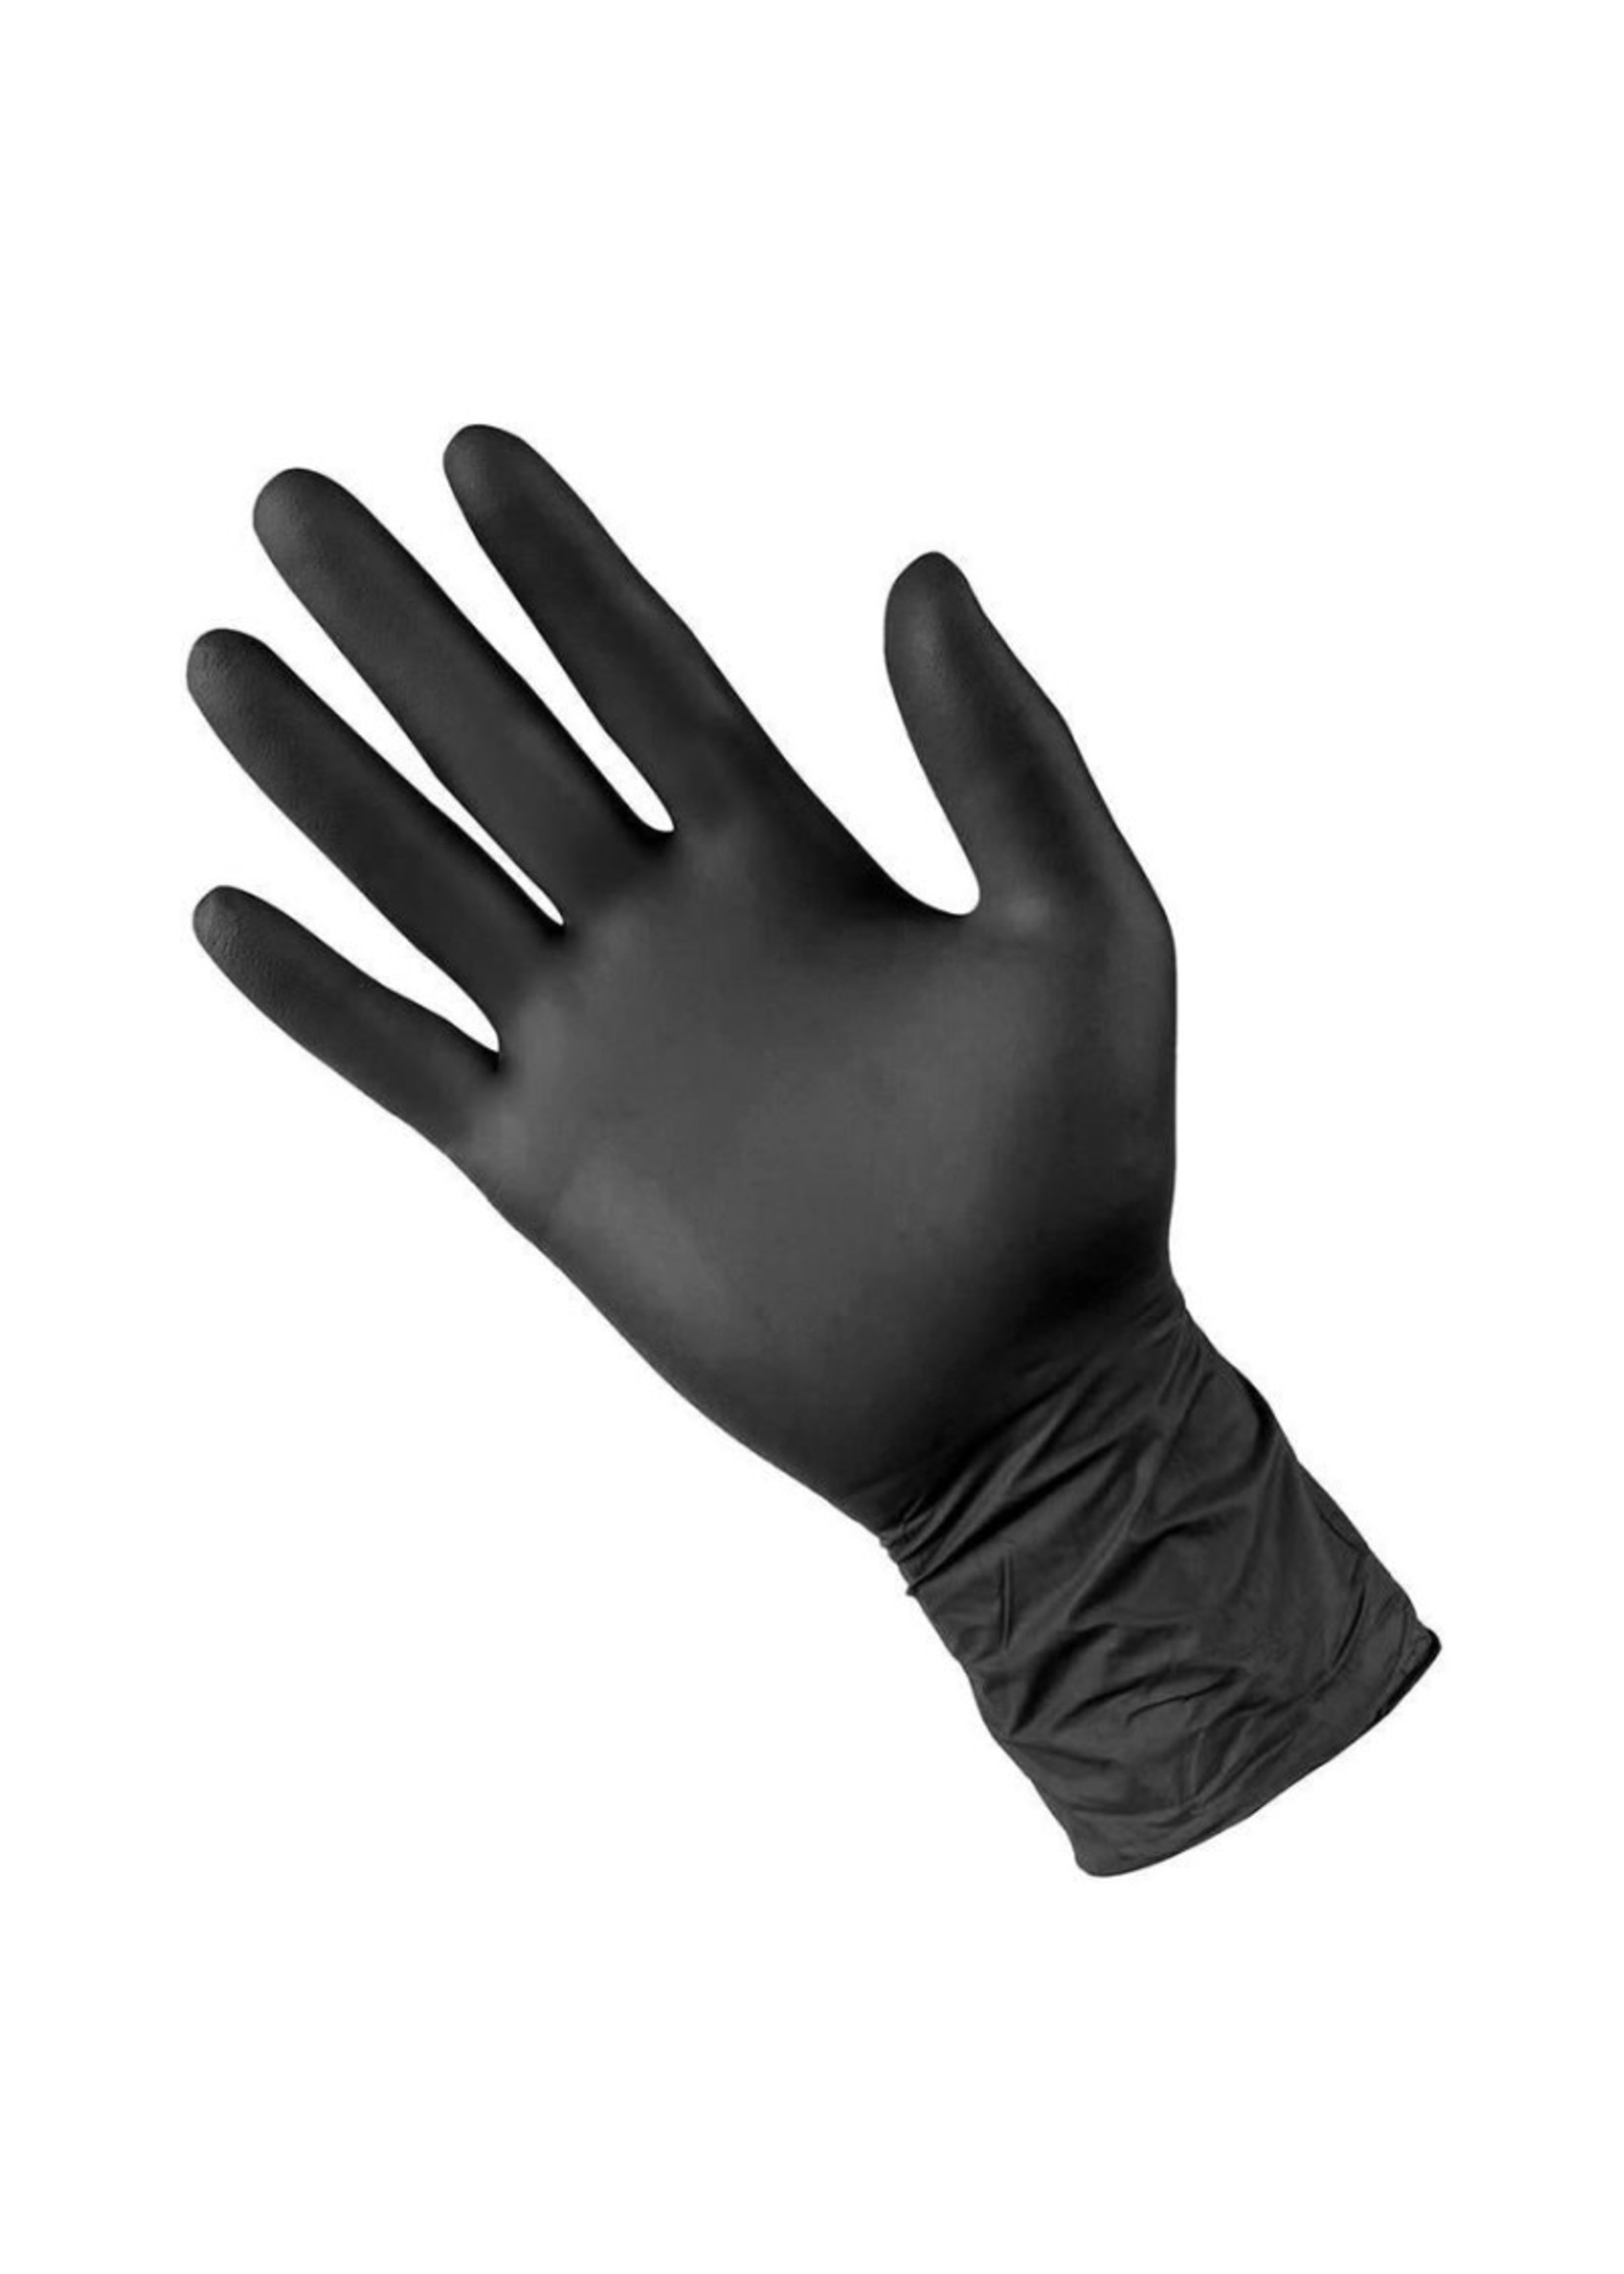 Lilith Salon Latex Gloves - Black - Large - Pair